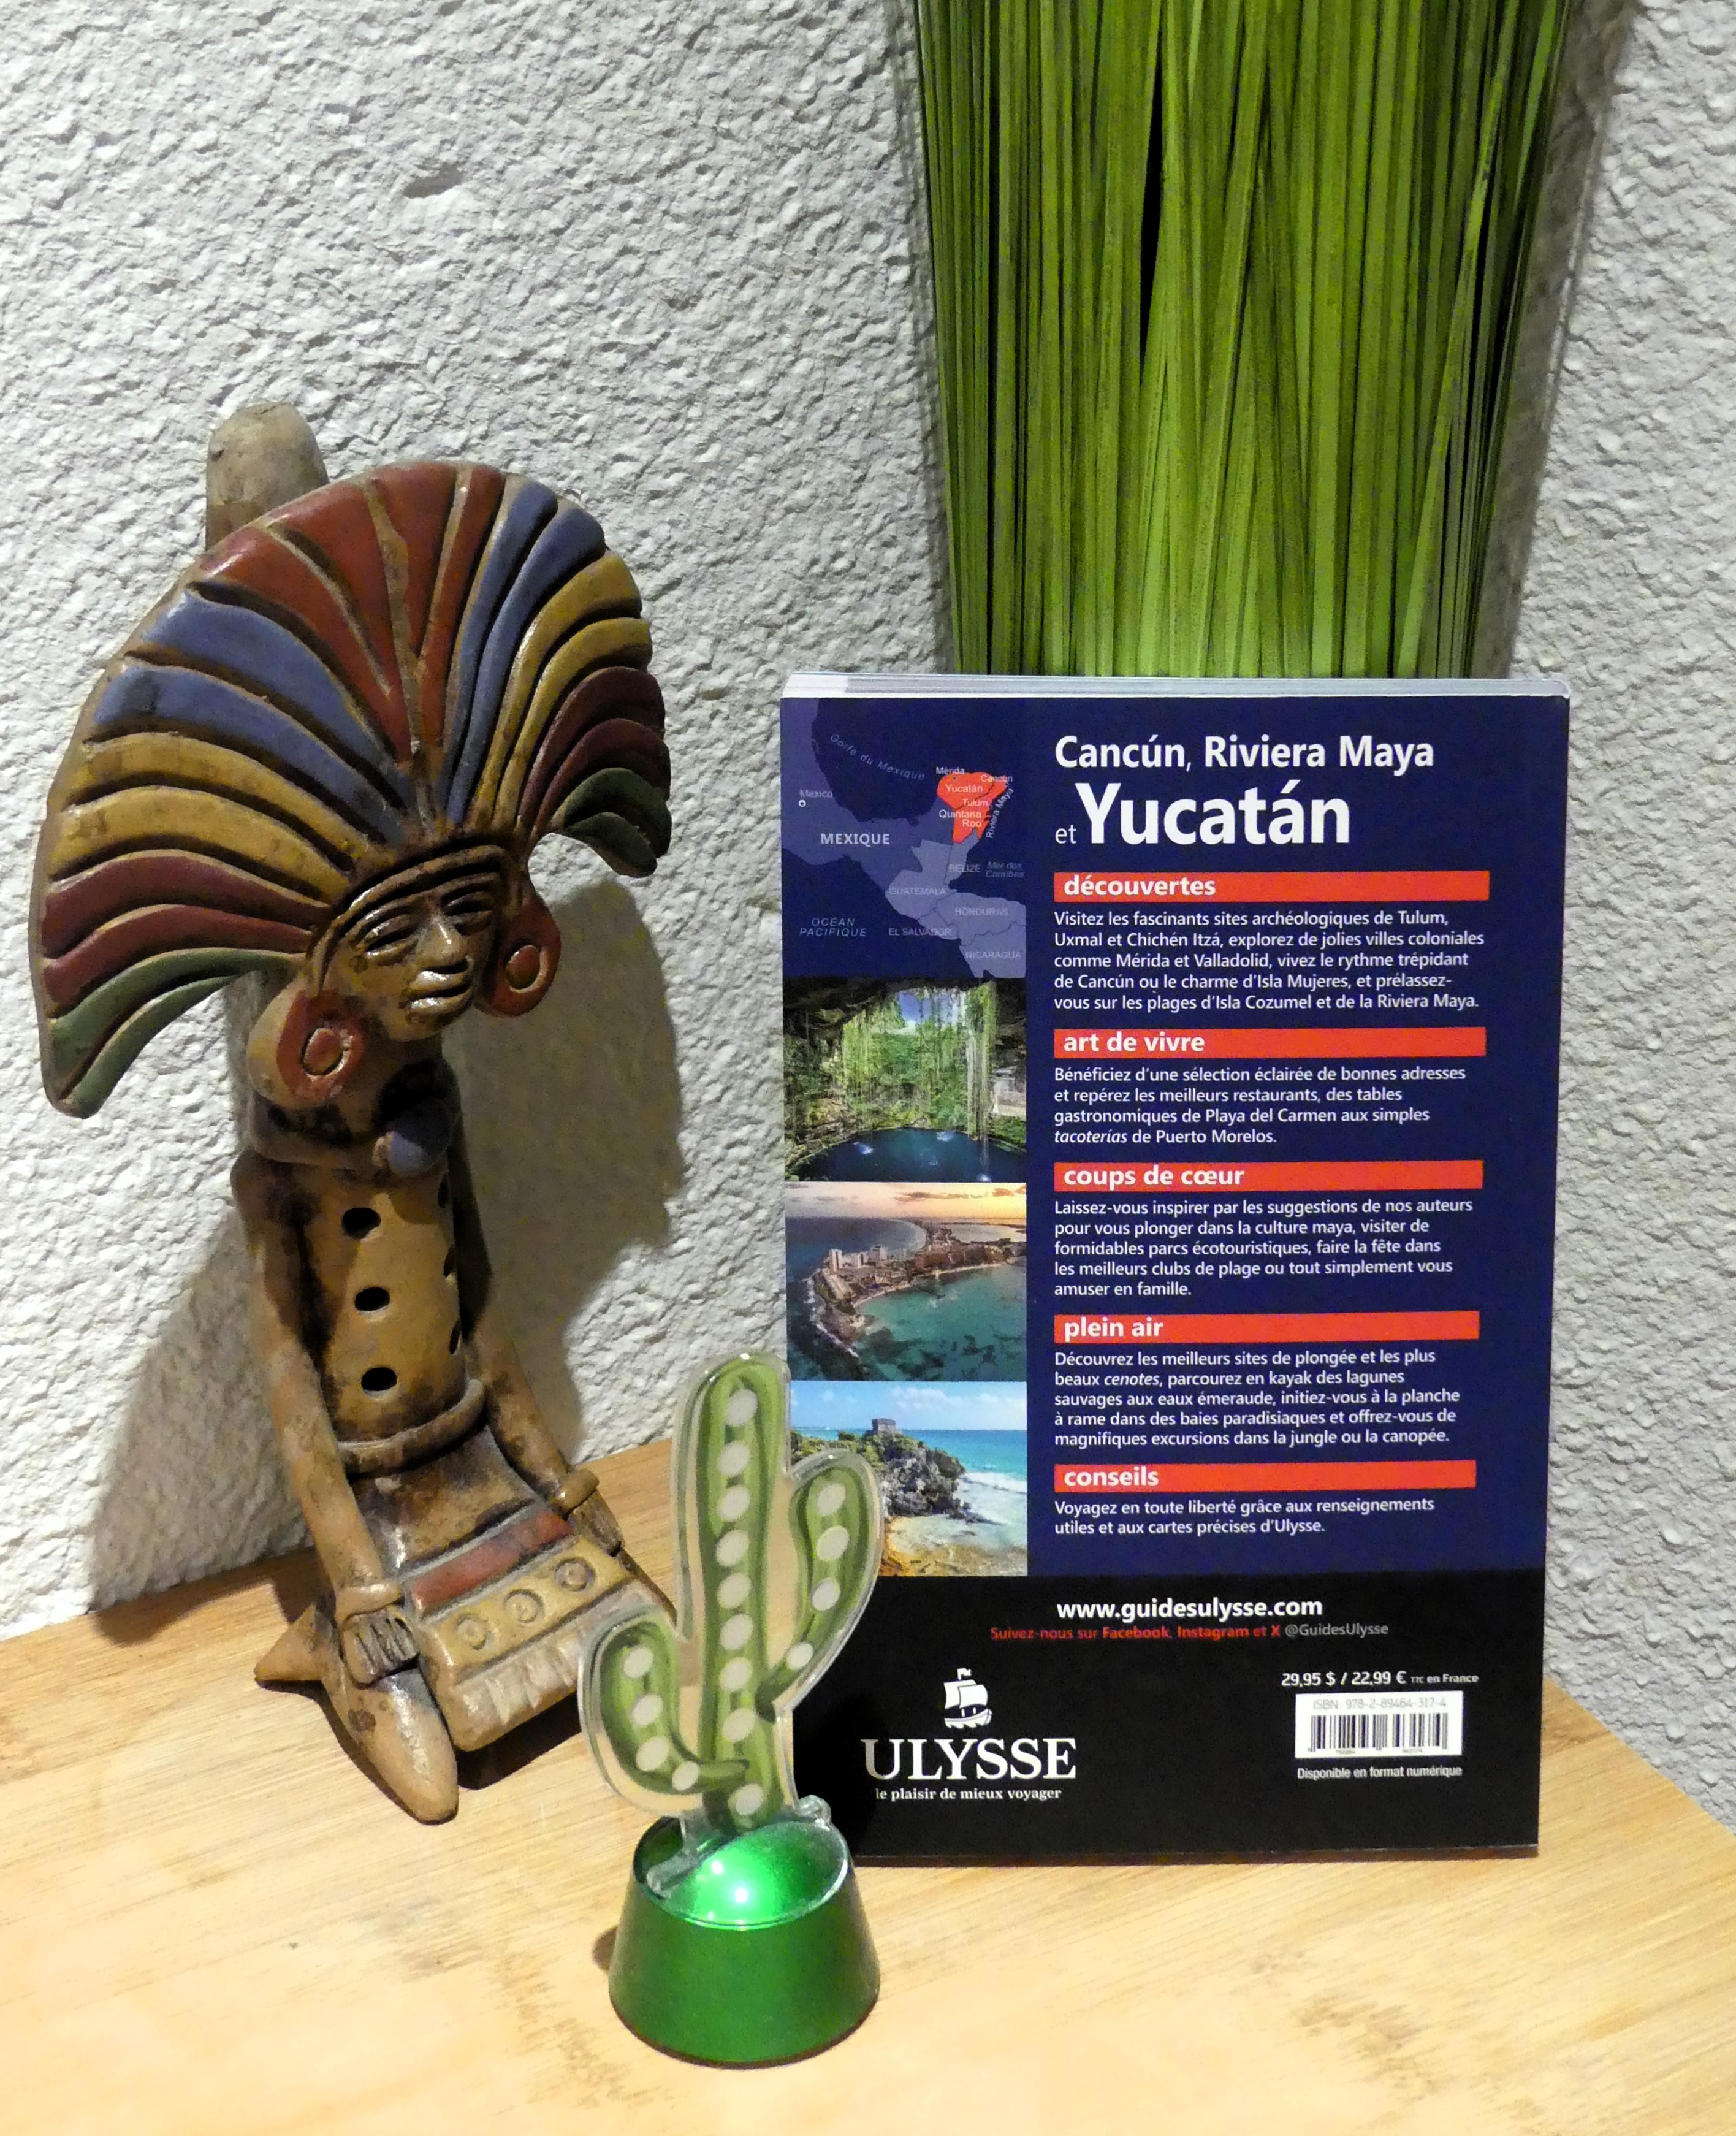 Cancun, Riviera Maya et Yucatan guides Ulysse